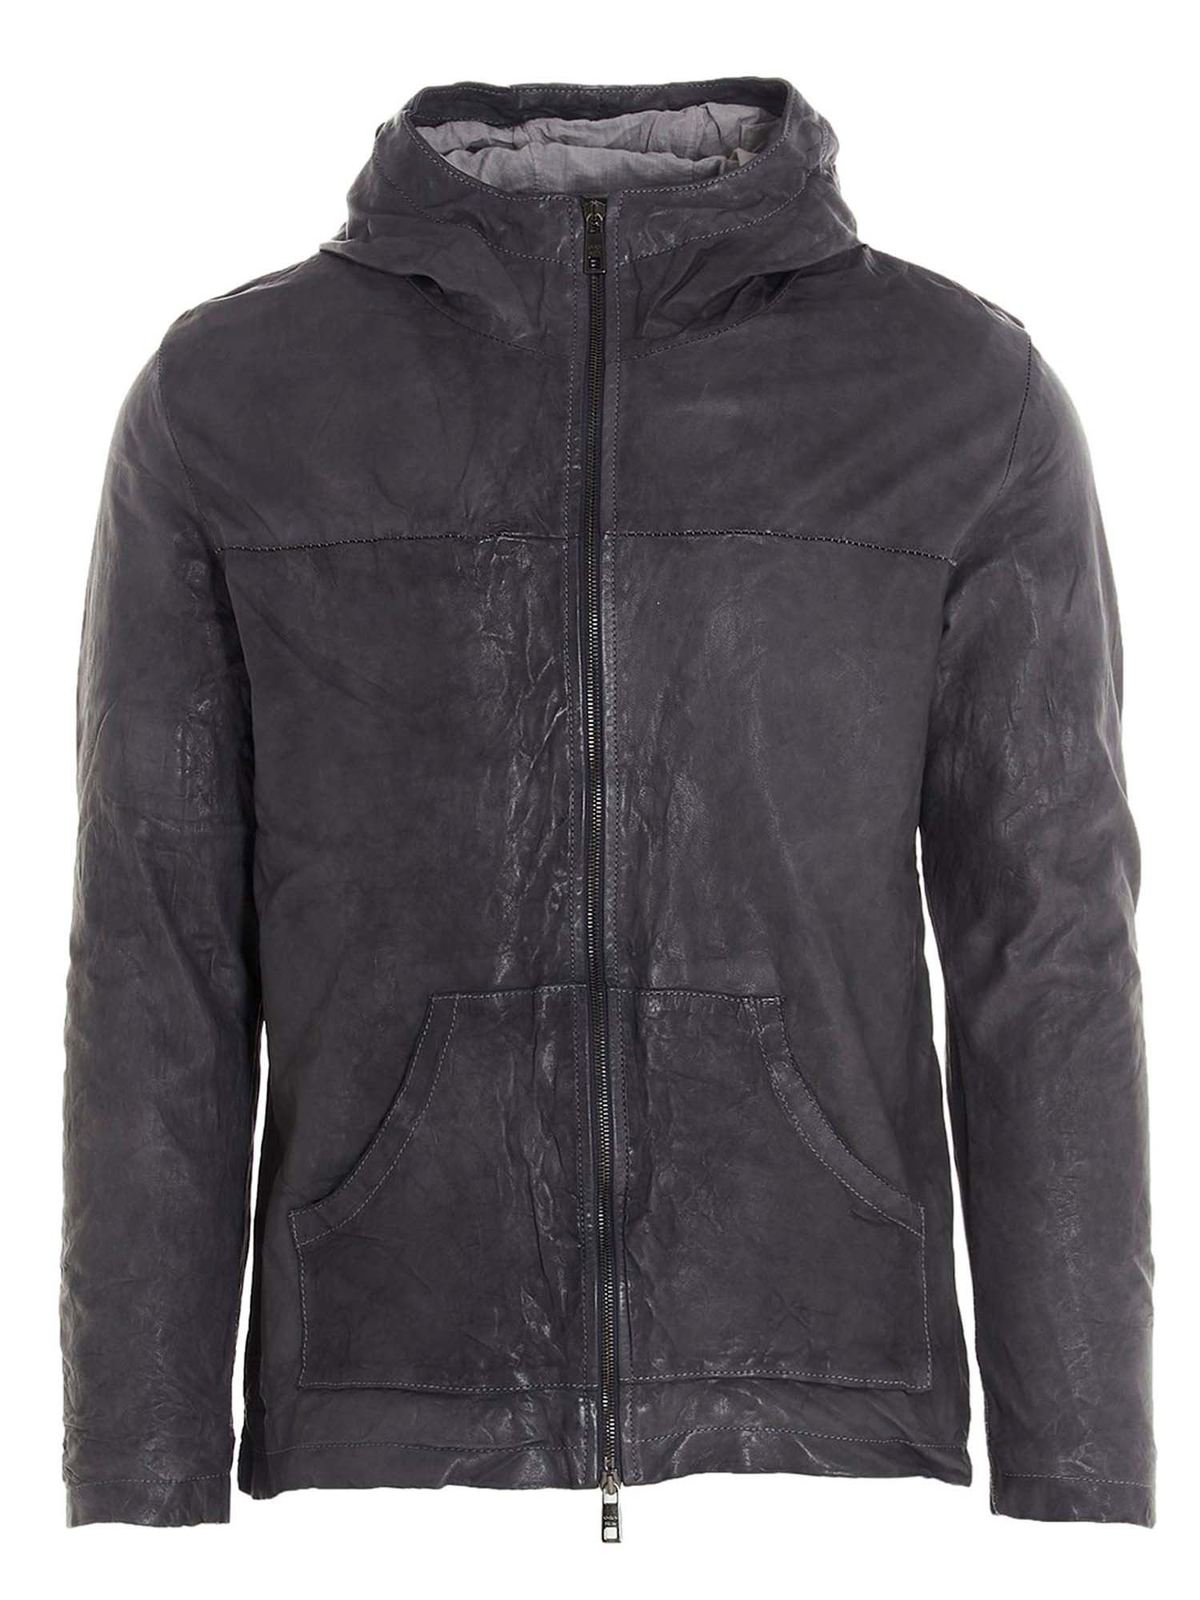 Leather jacket Giorgio Brato - Wrinkled leather jacket in grey ...